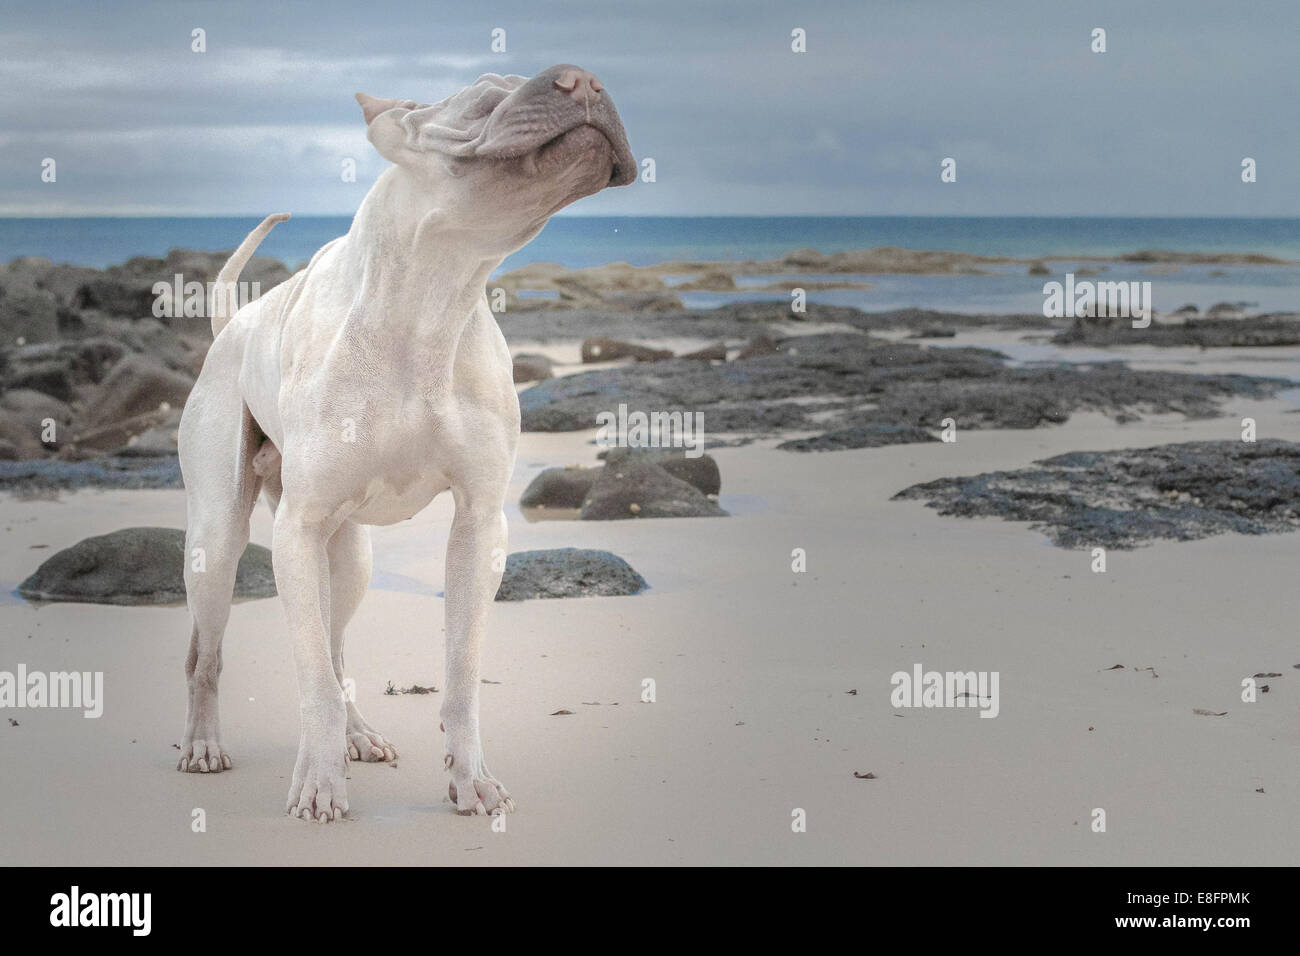 Shair-pei dog standing on beach shaking his head, Australia Stock Photo